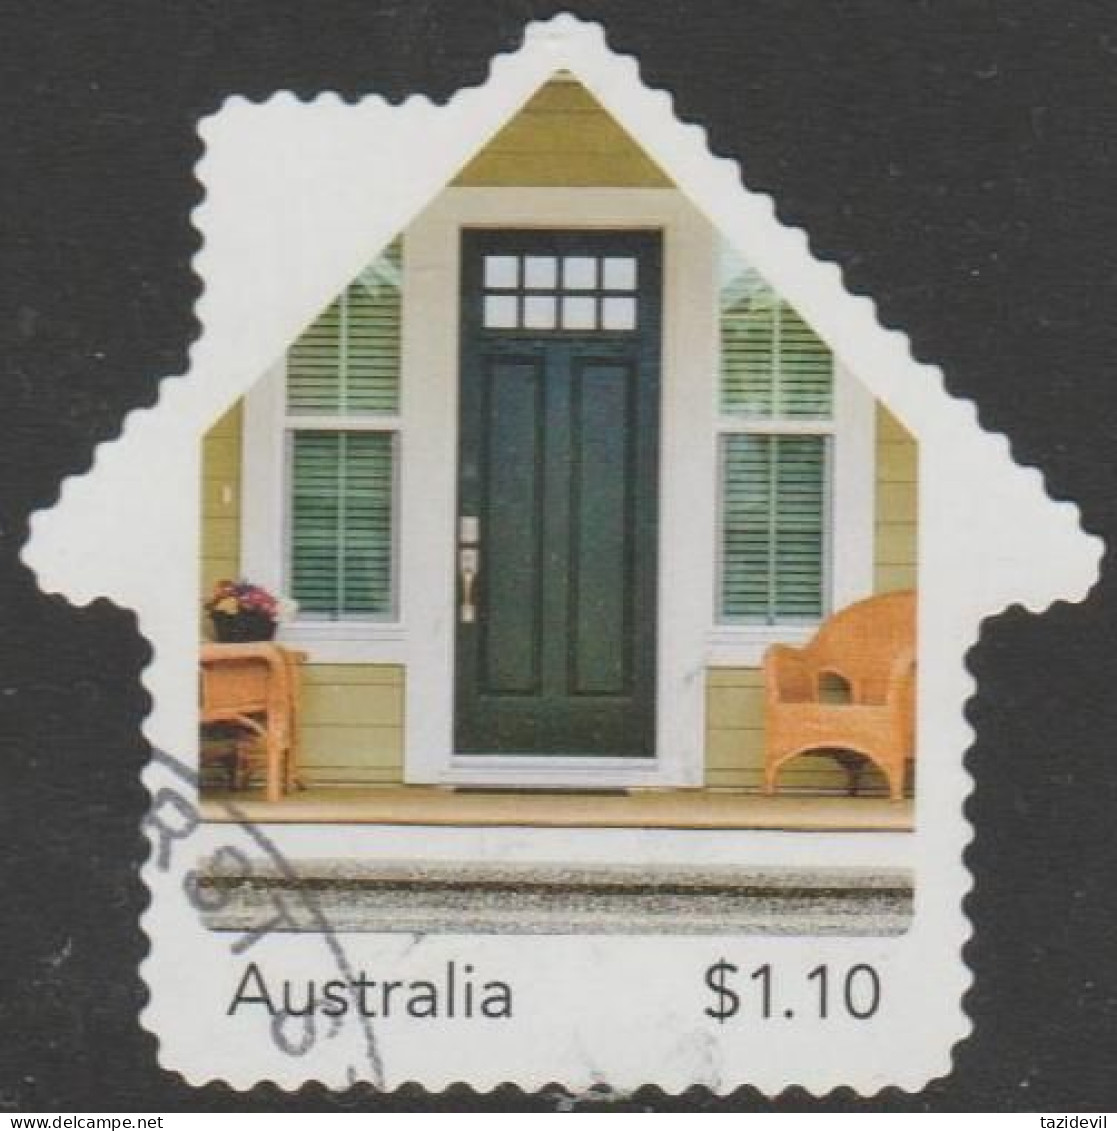 AUSTRALIA - DIE-CUT - USED - 2020 $1.10 "MyStamps" - New Home - Used Stamps